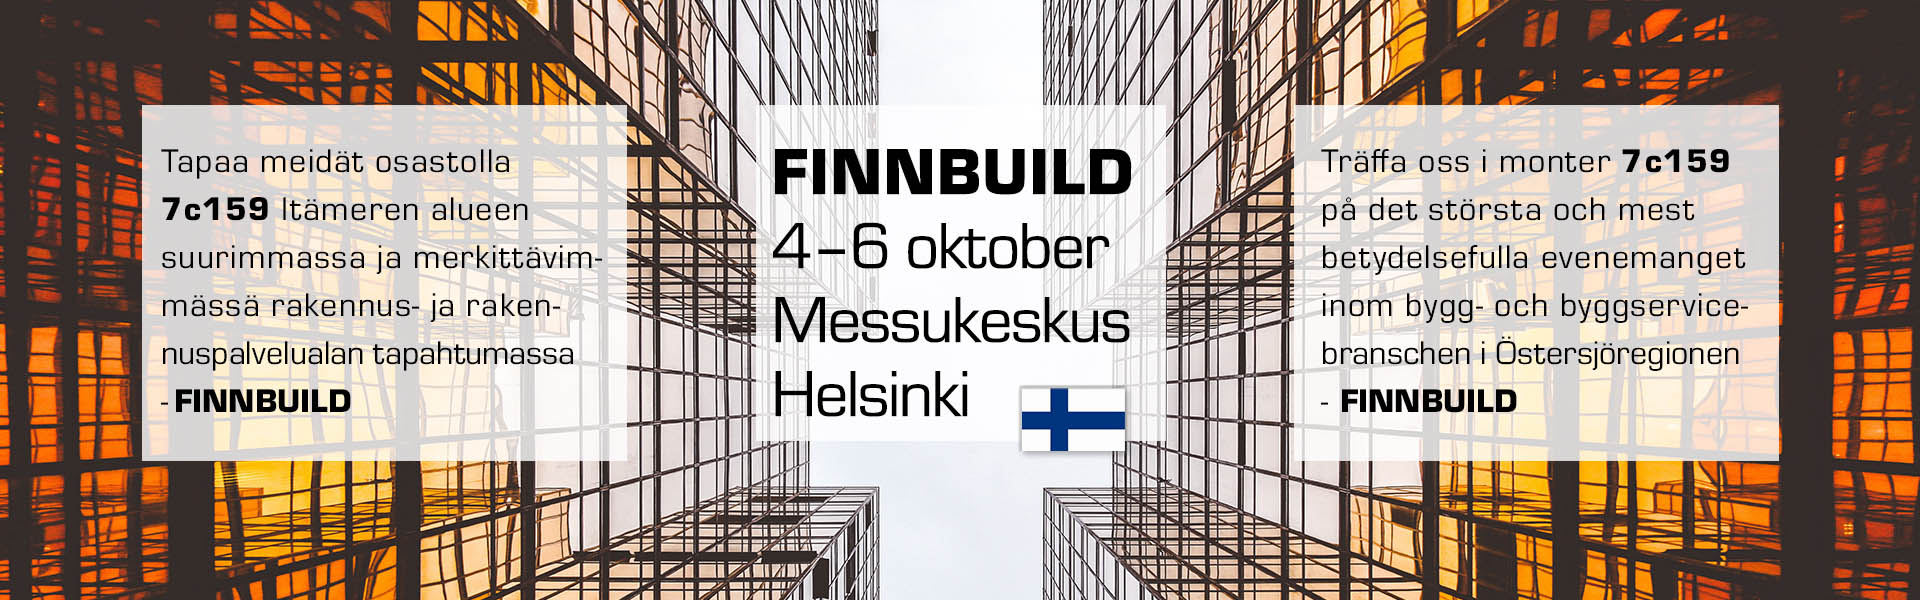 Finnbuild banner_1920x600px_vers A.jpg